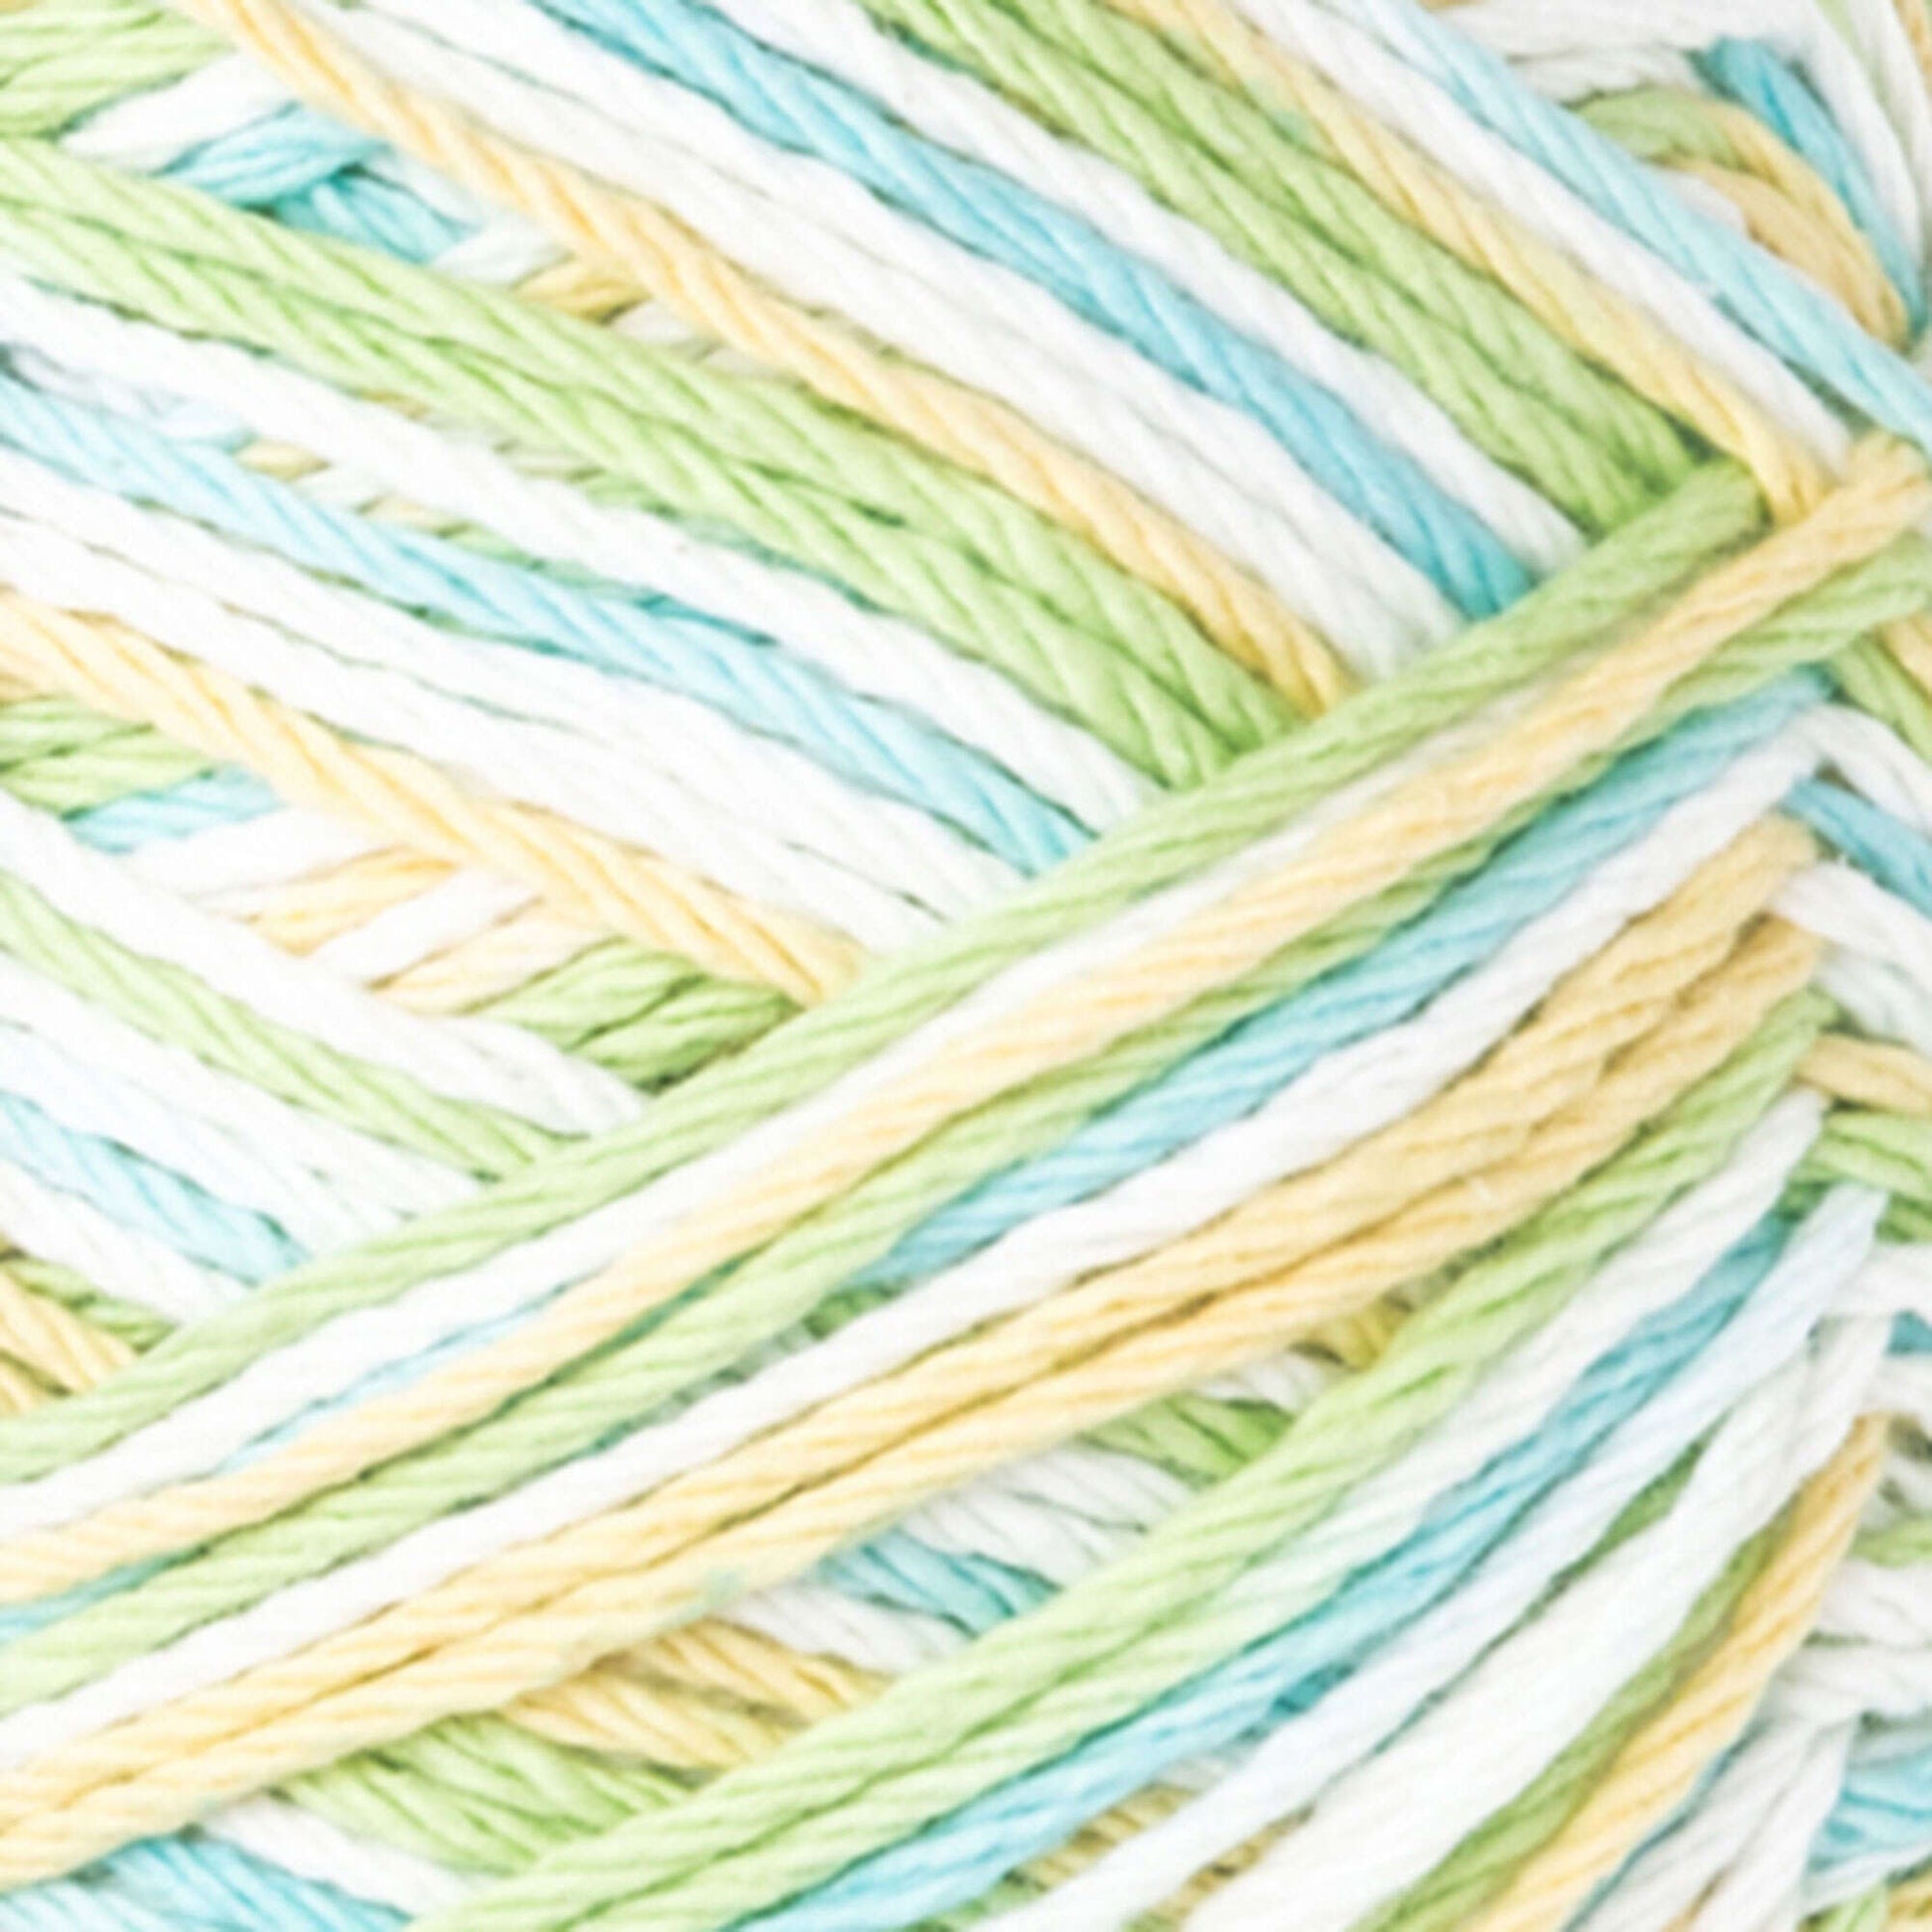 Bernat Handicrafter Cotton Ombres Yarn (340g/12oz) - Discontinued Shades Sunny Sky